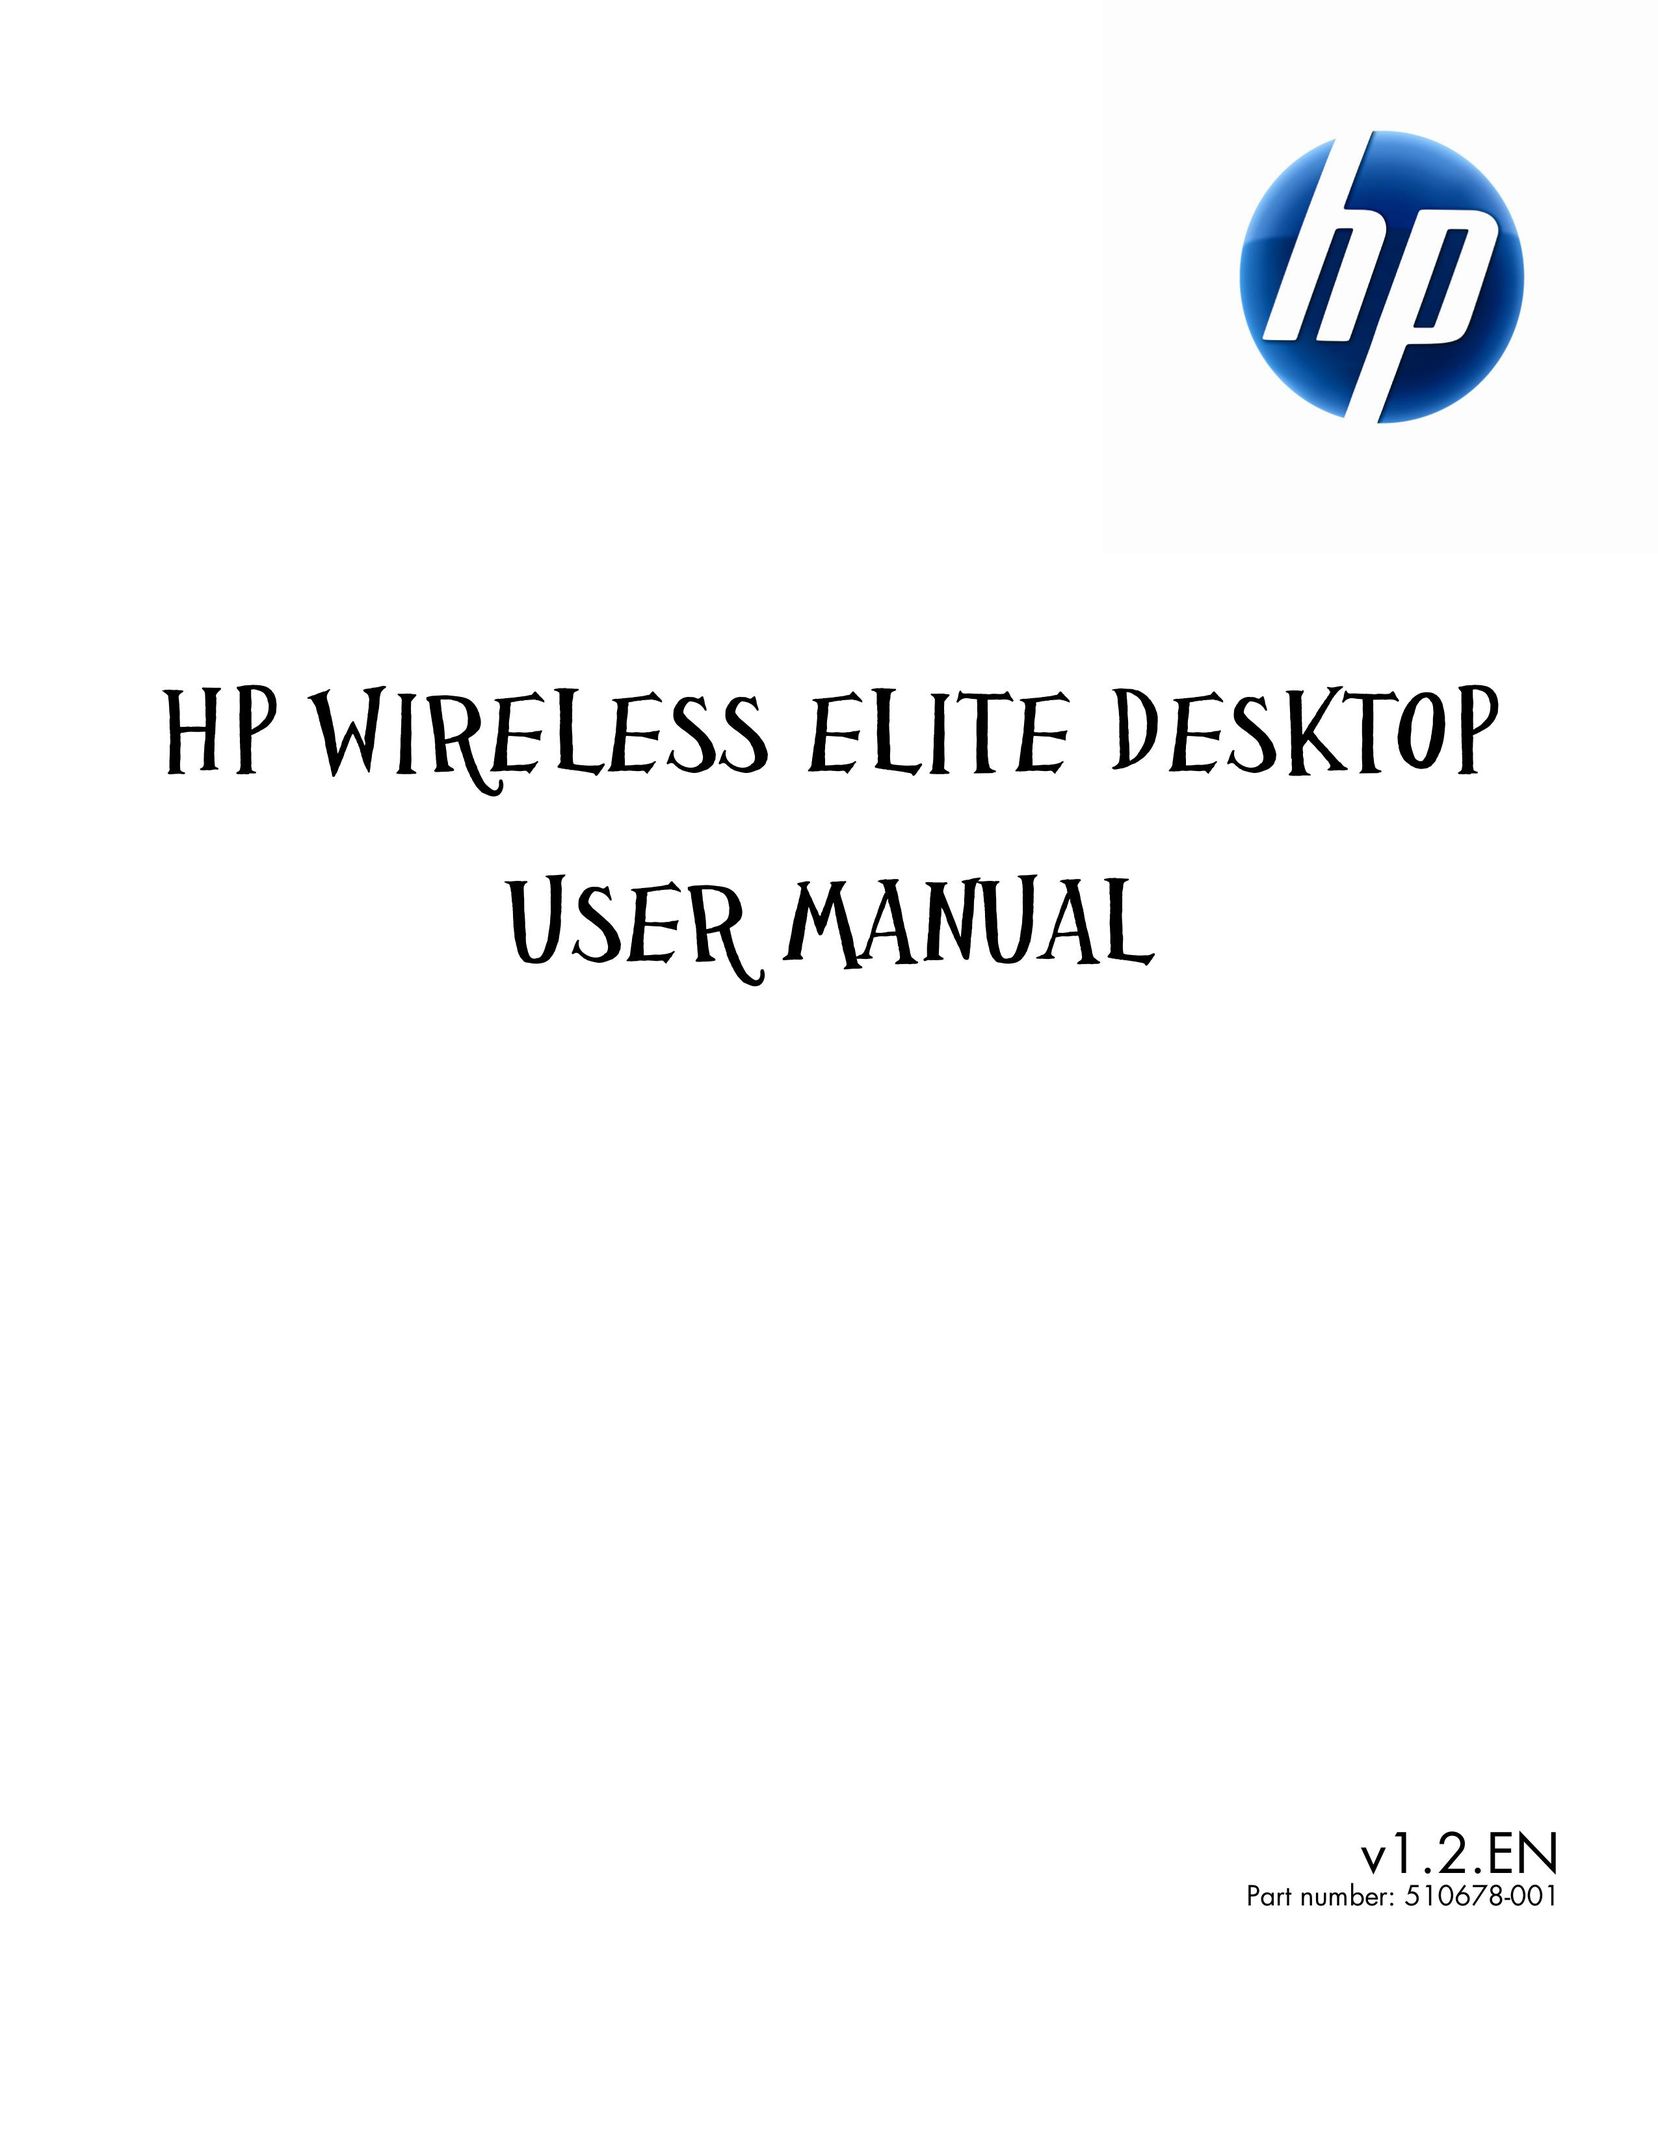 HP (Hewlett-Packard) 510678-001 Computer Keyboard User Manual